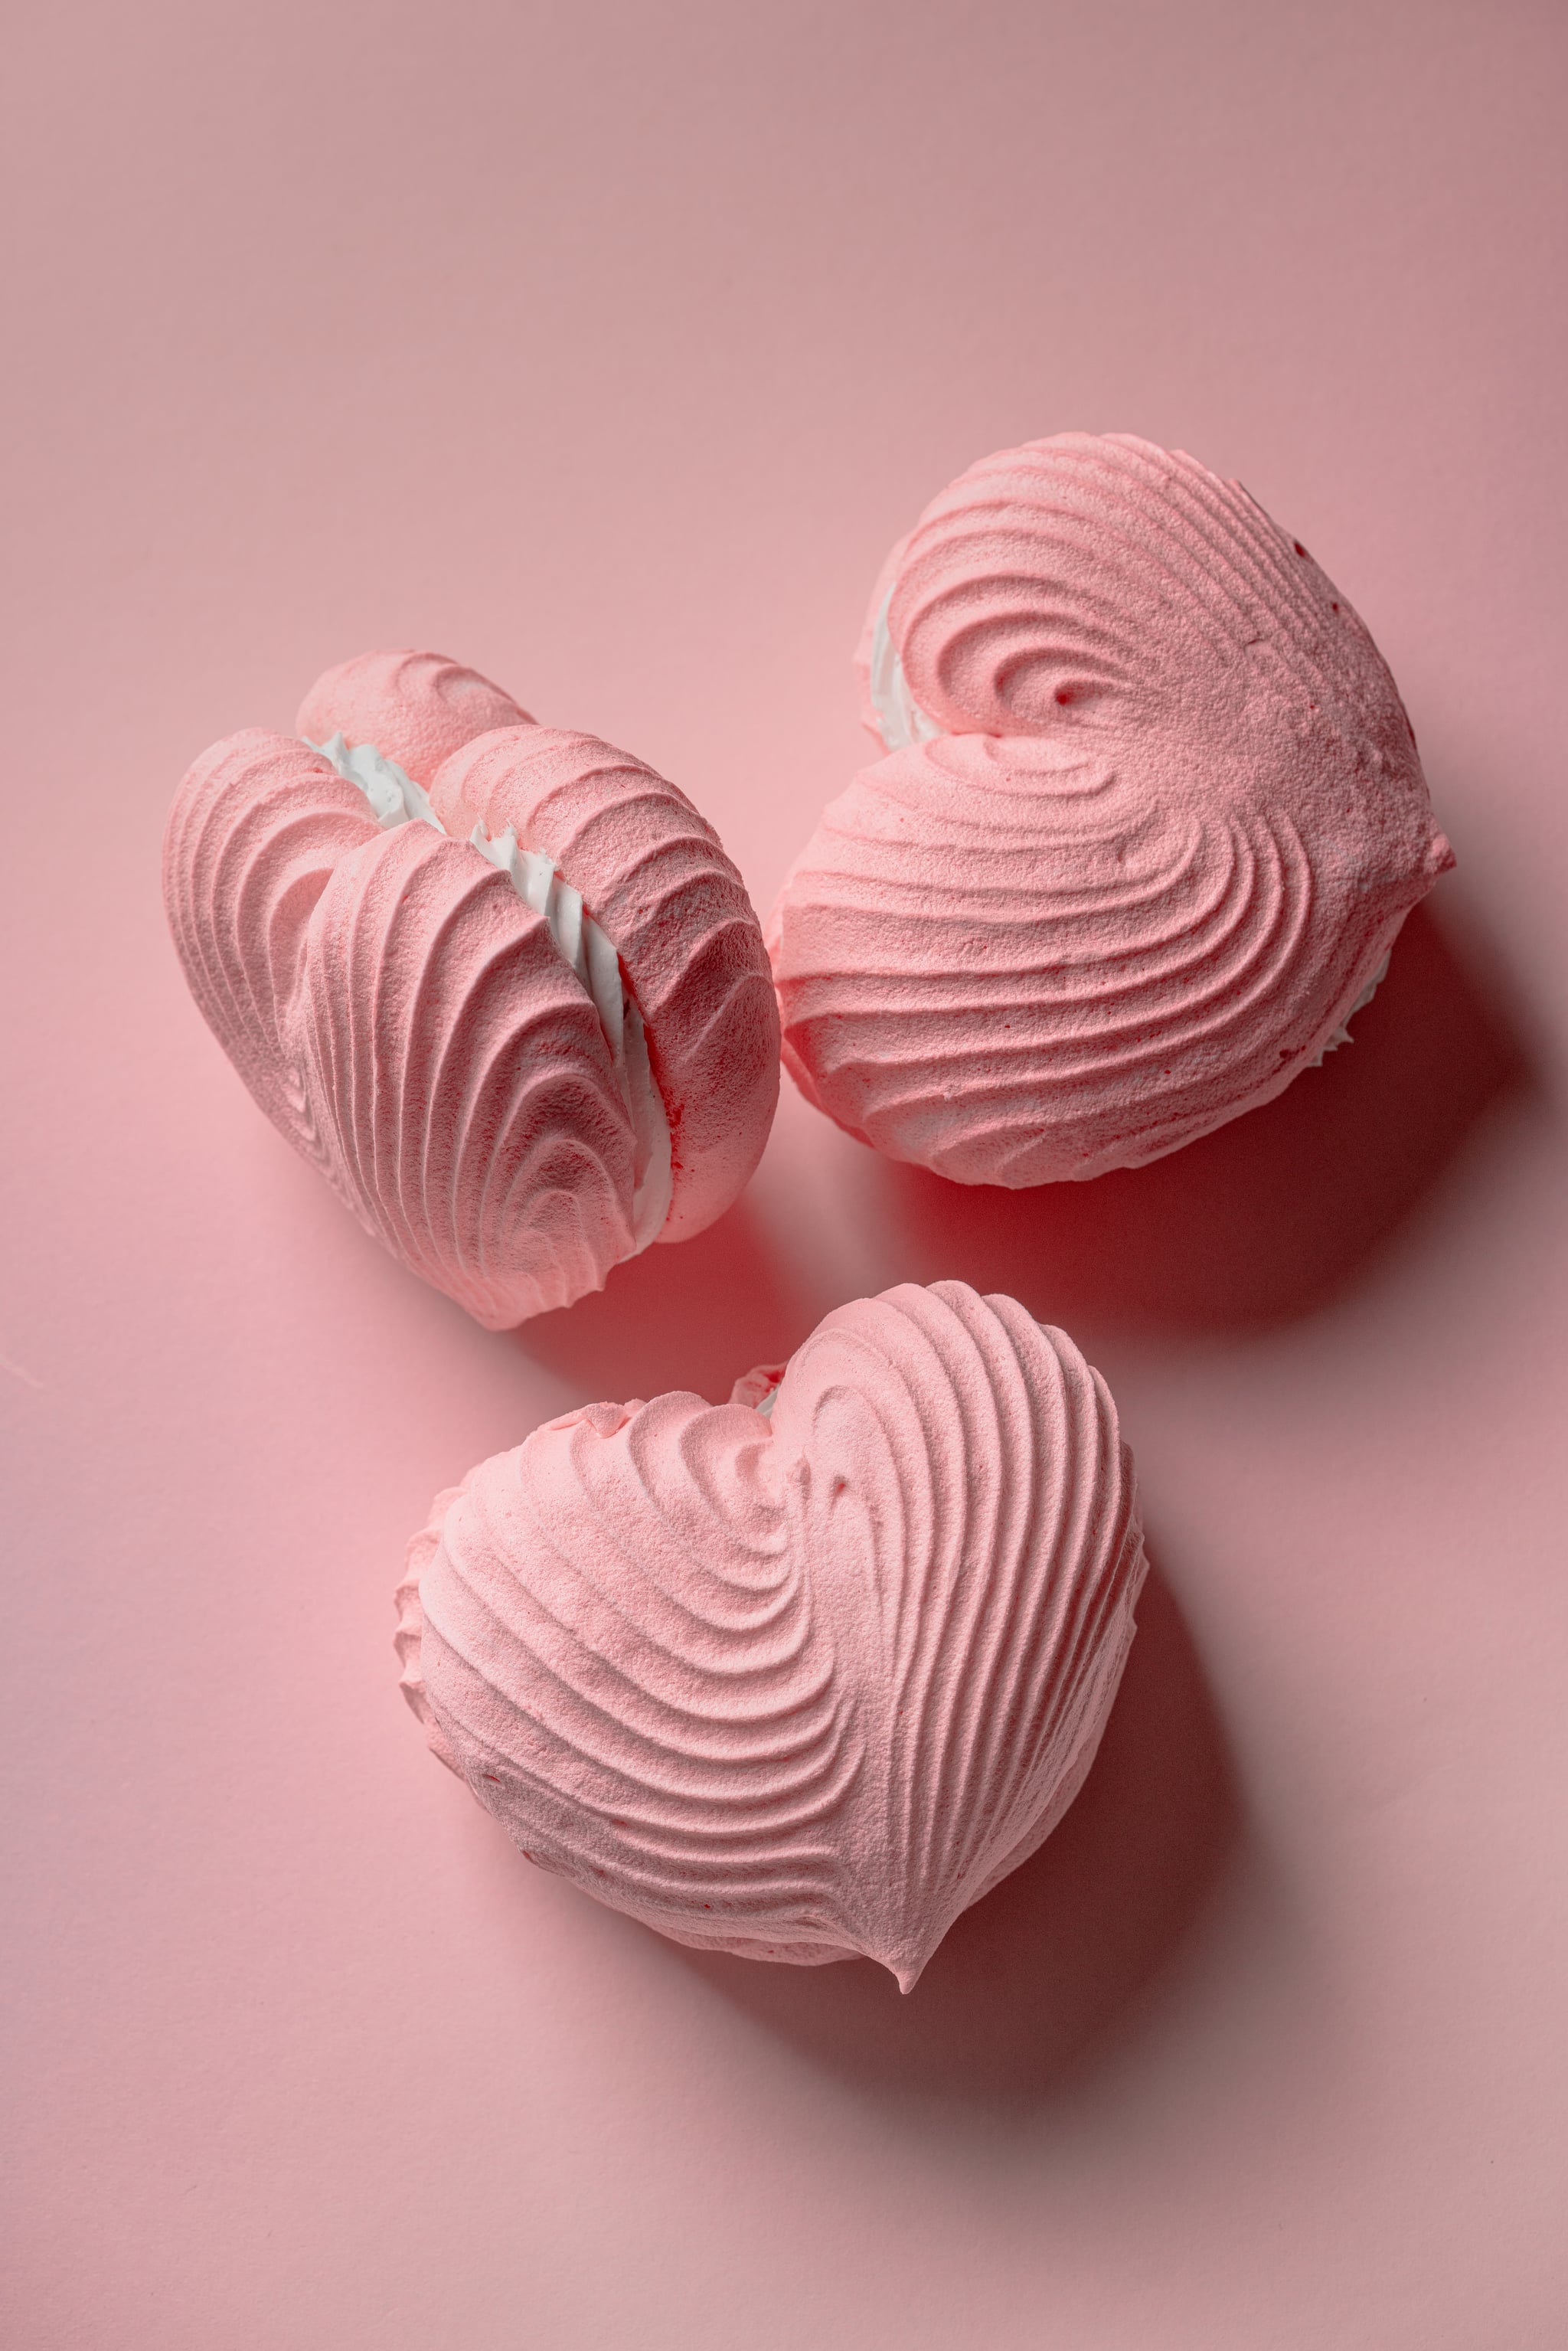 Pink hearts cute HD phone wallpaper  Peakpx